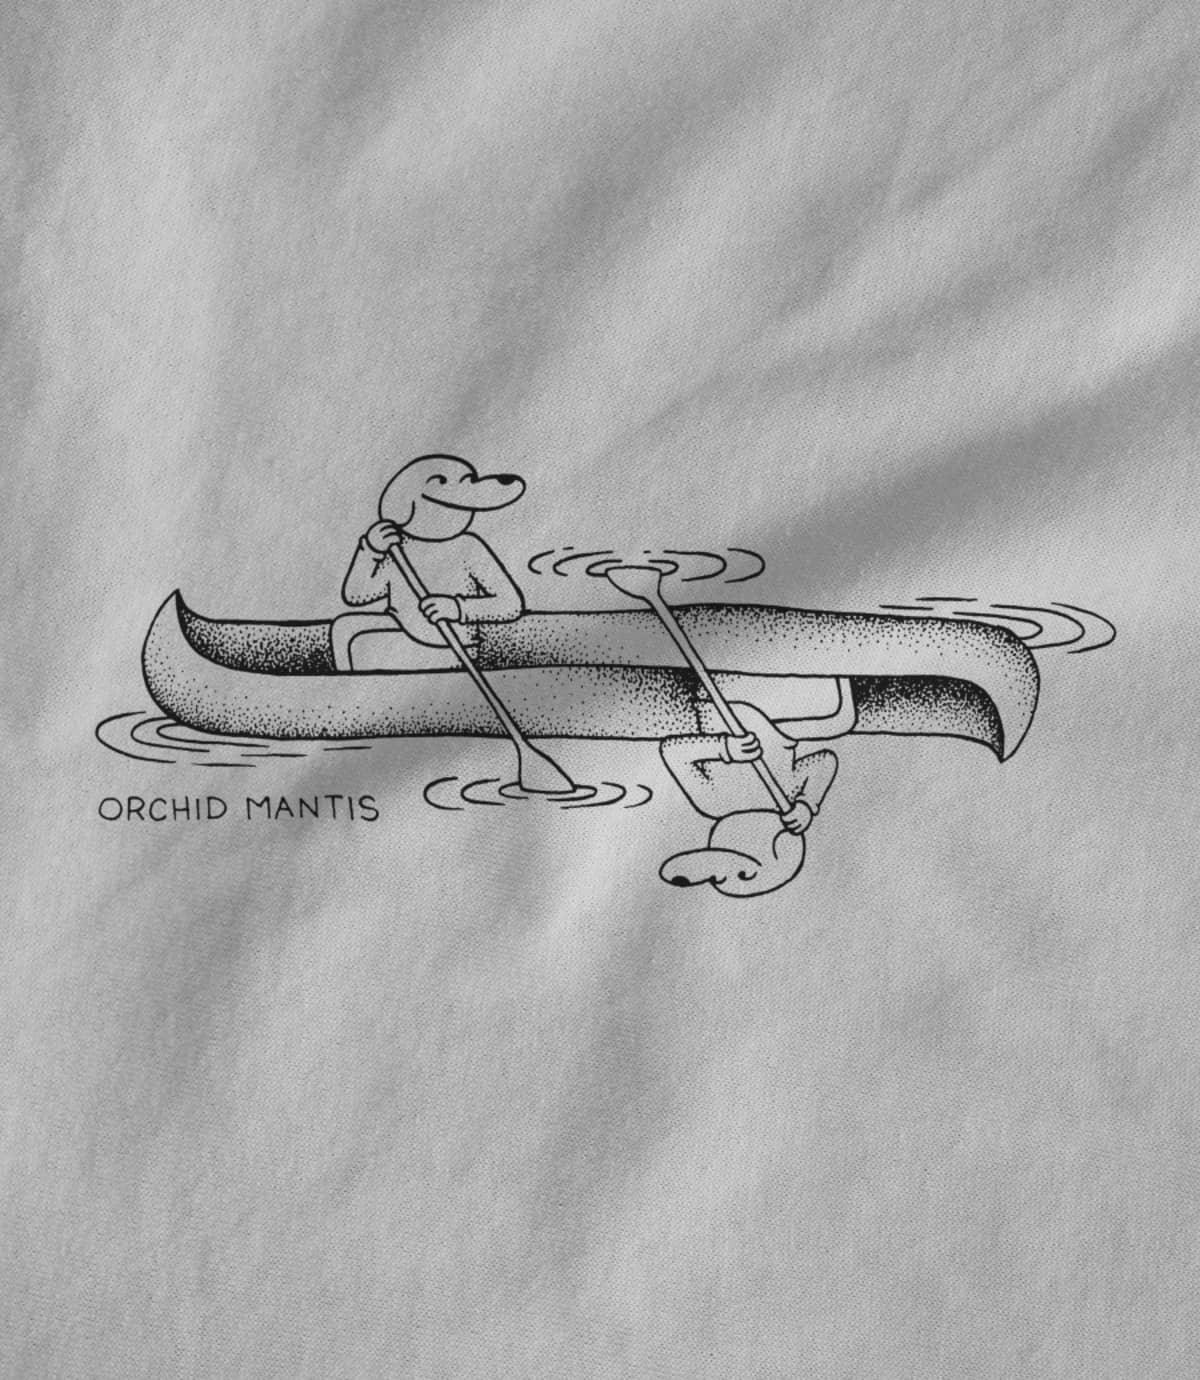 Orchid mantis canoe shirt 1603125311